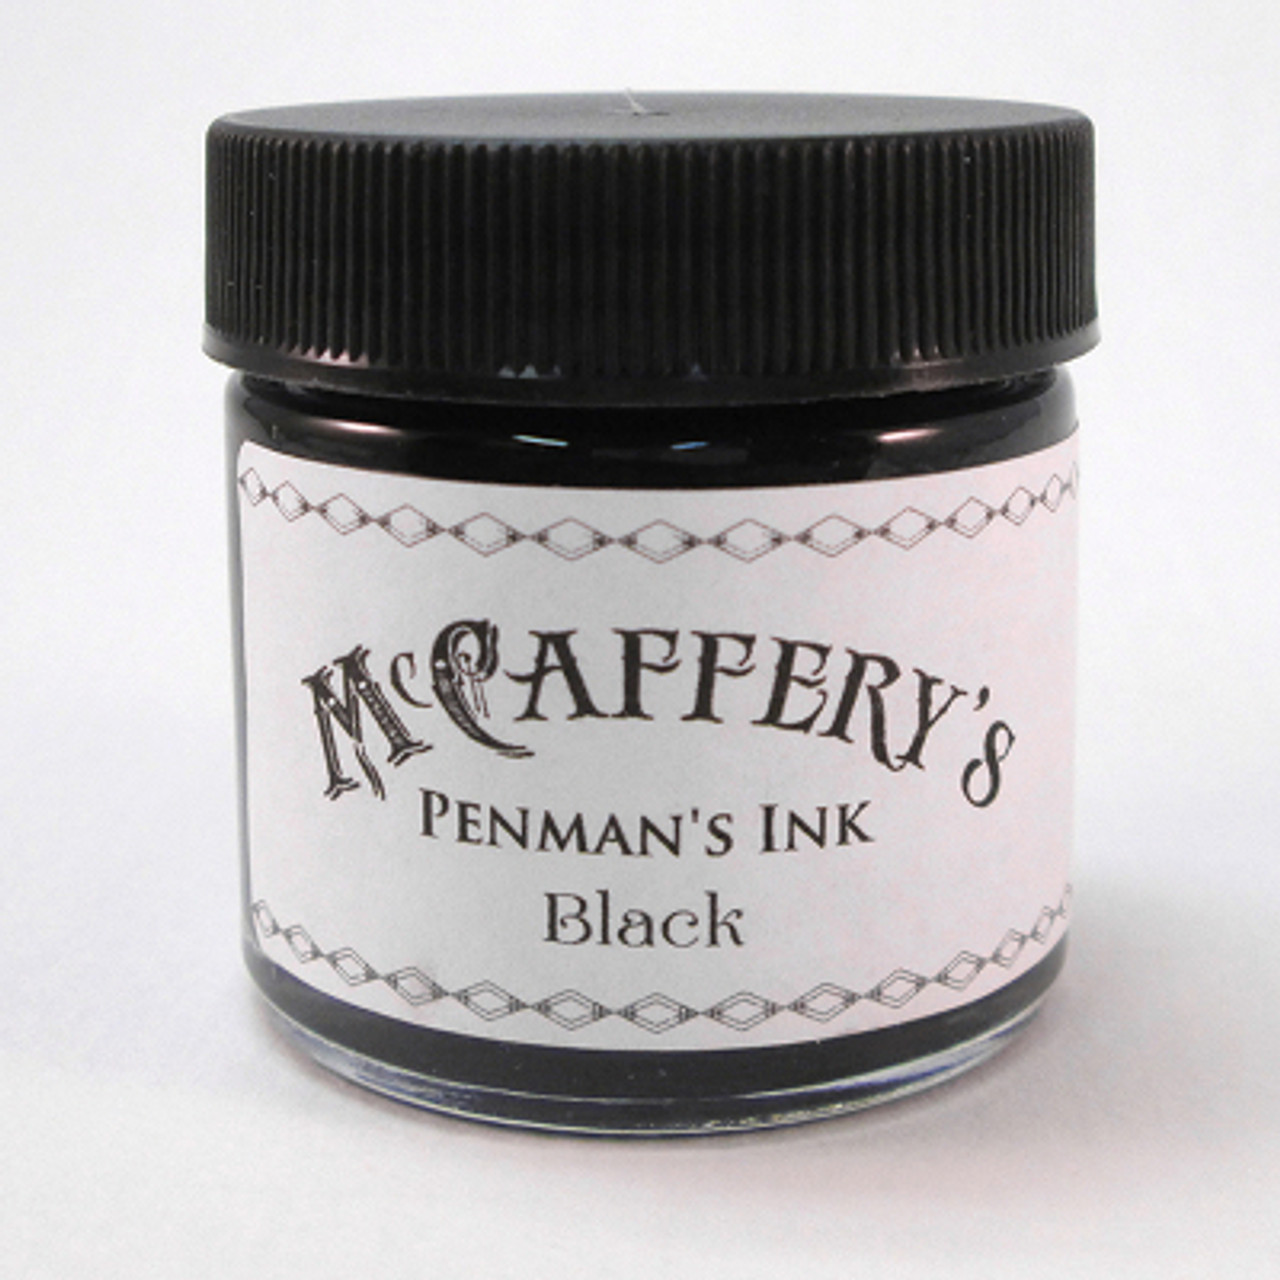 McCaffery's Penman's Ink - John Neal Books